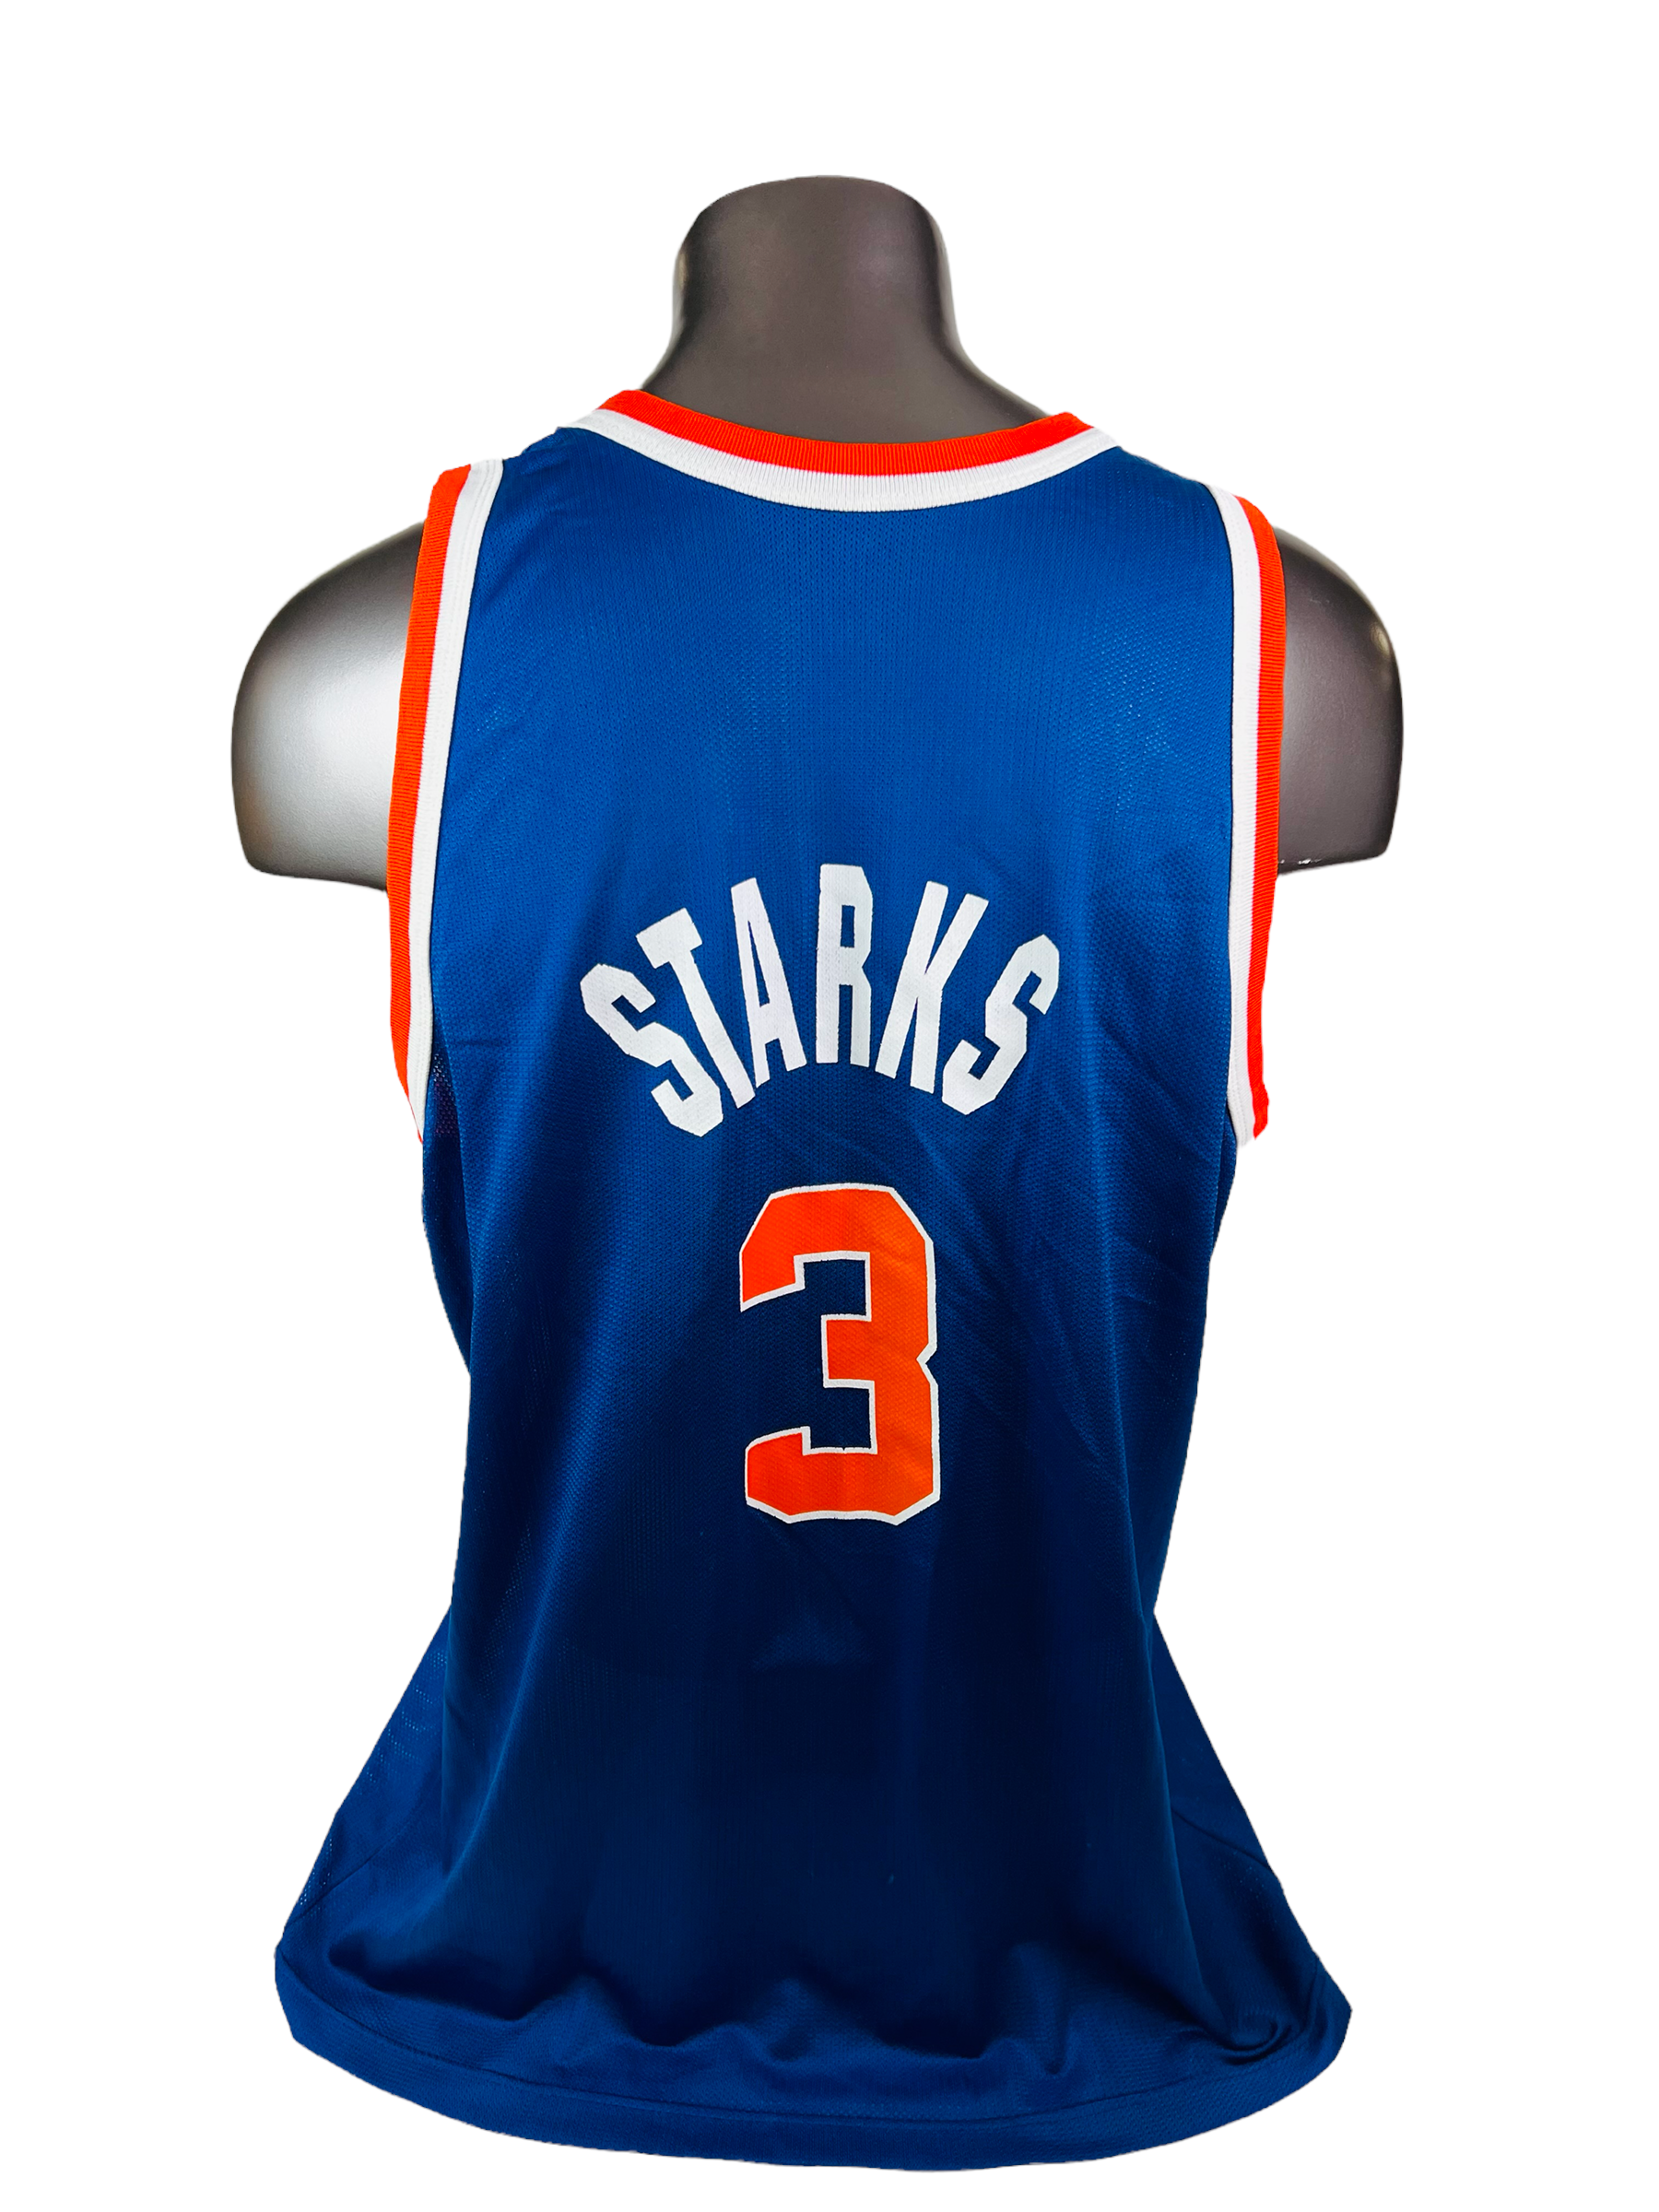 Authentic Champion NBA John Starks New York Knicks Jersey, Men's